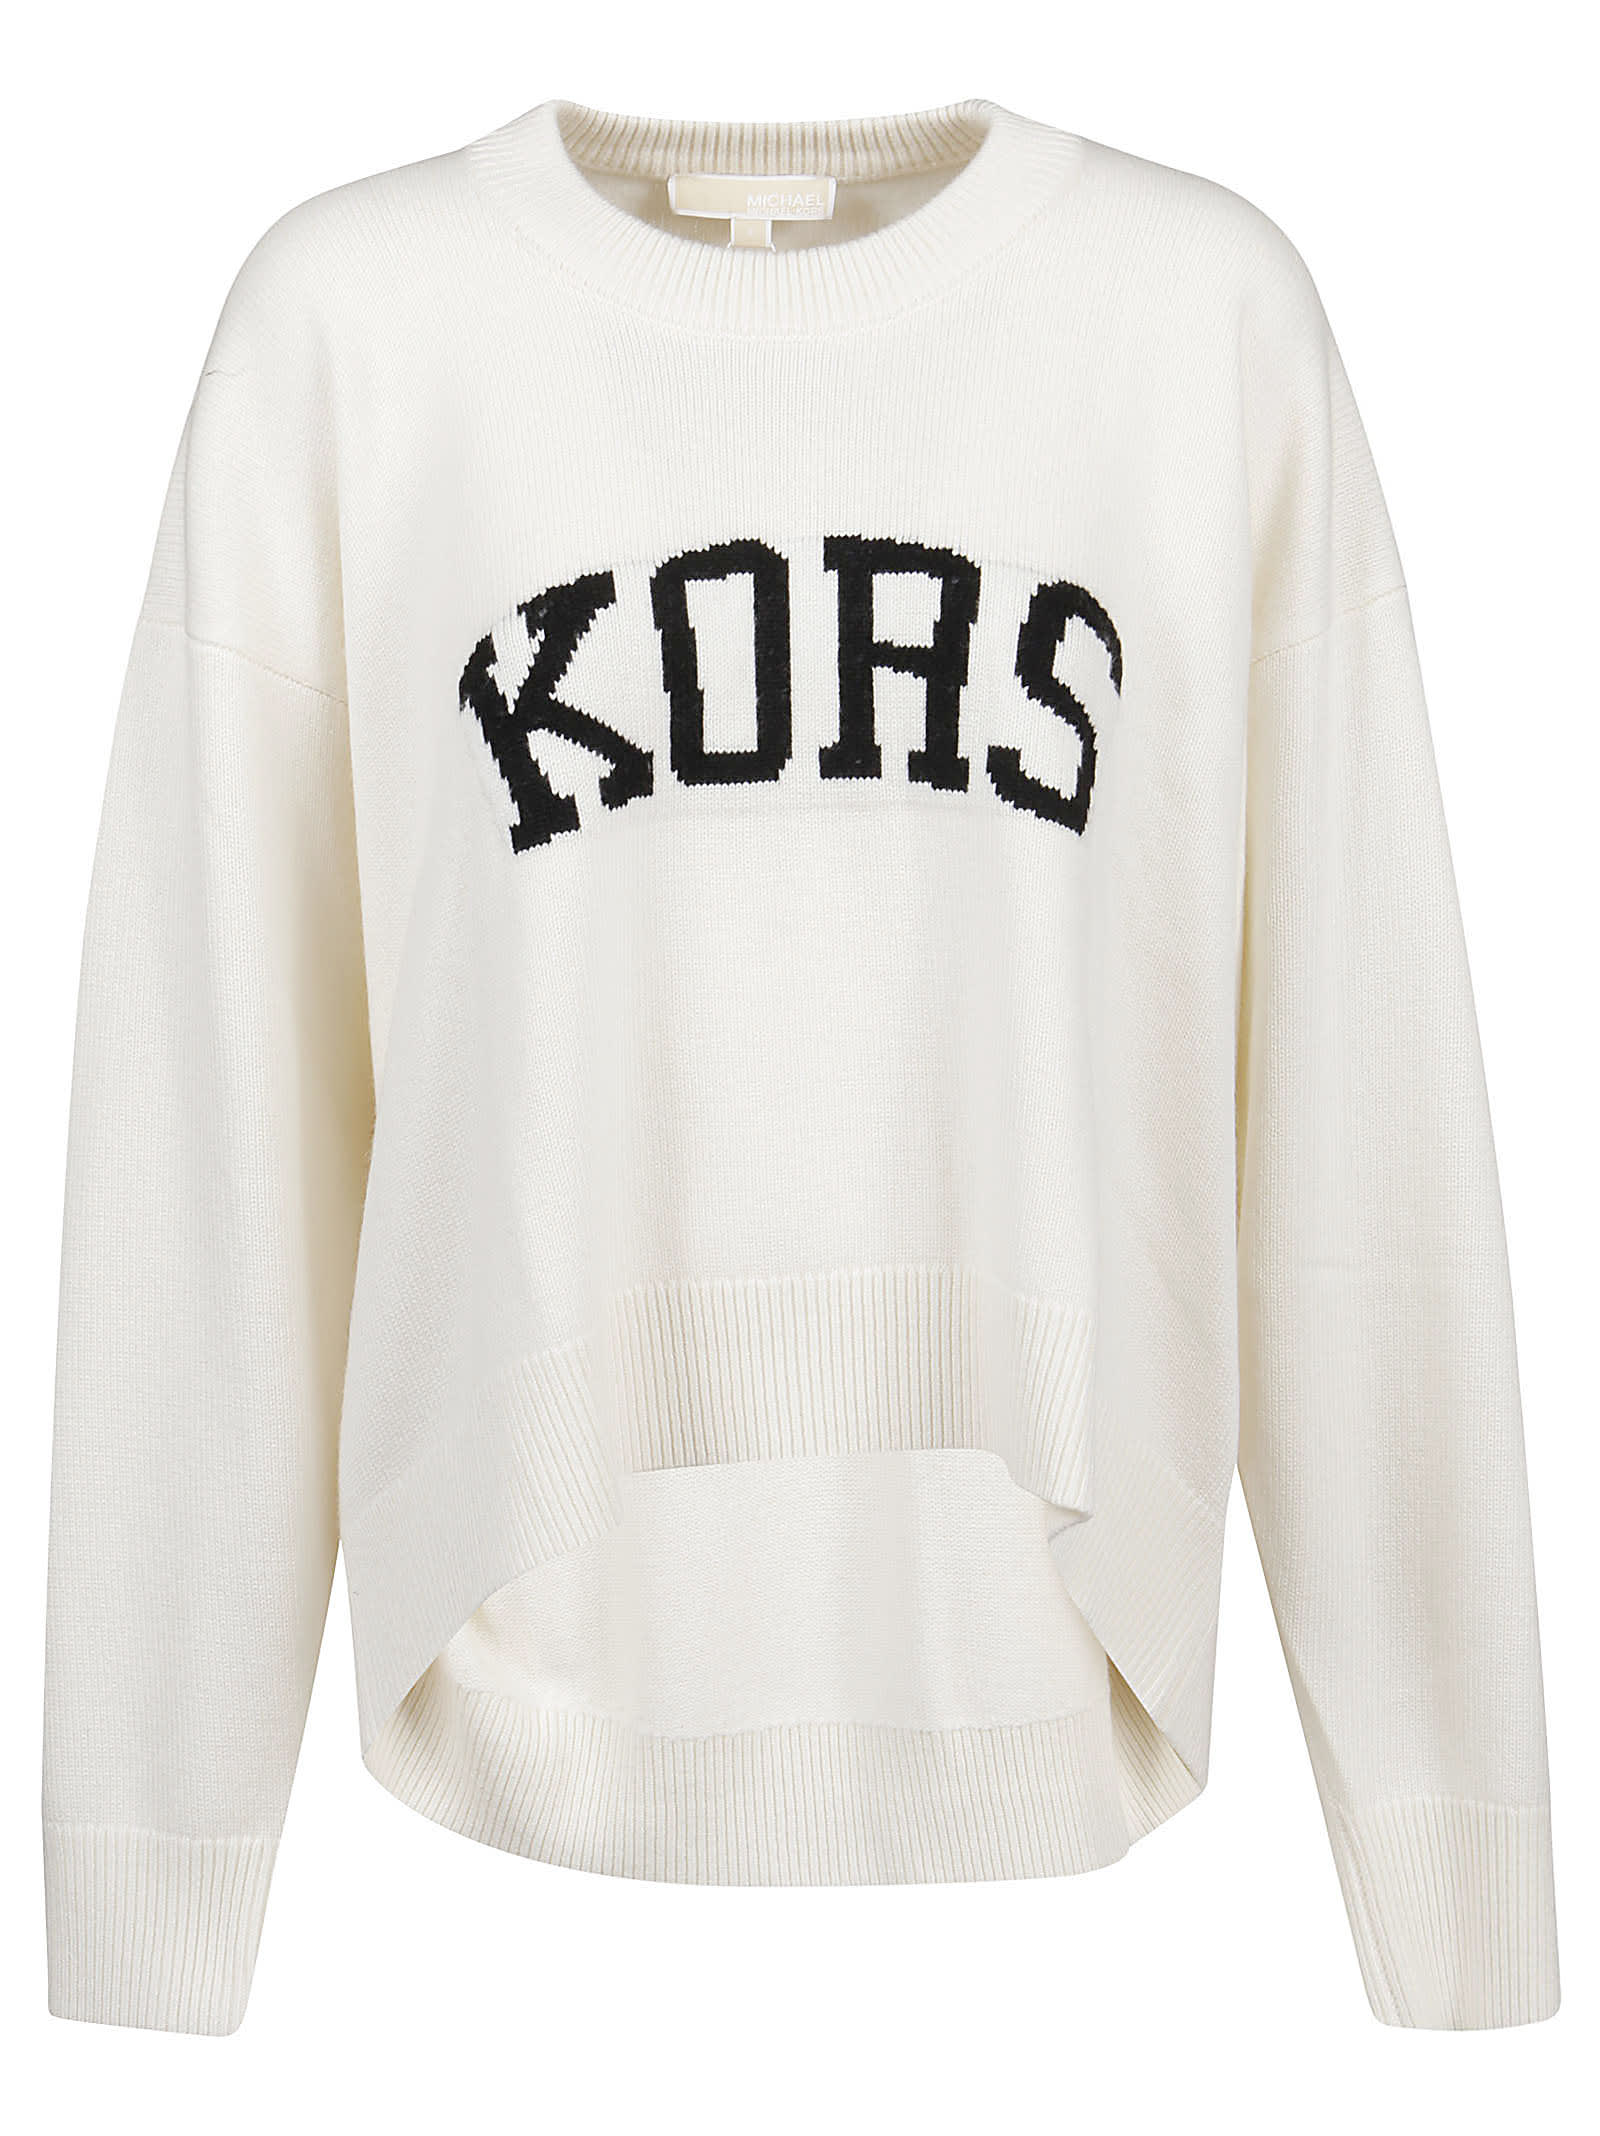 Michael Kors Kors Low Sweater